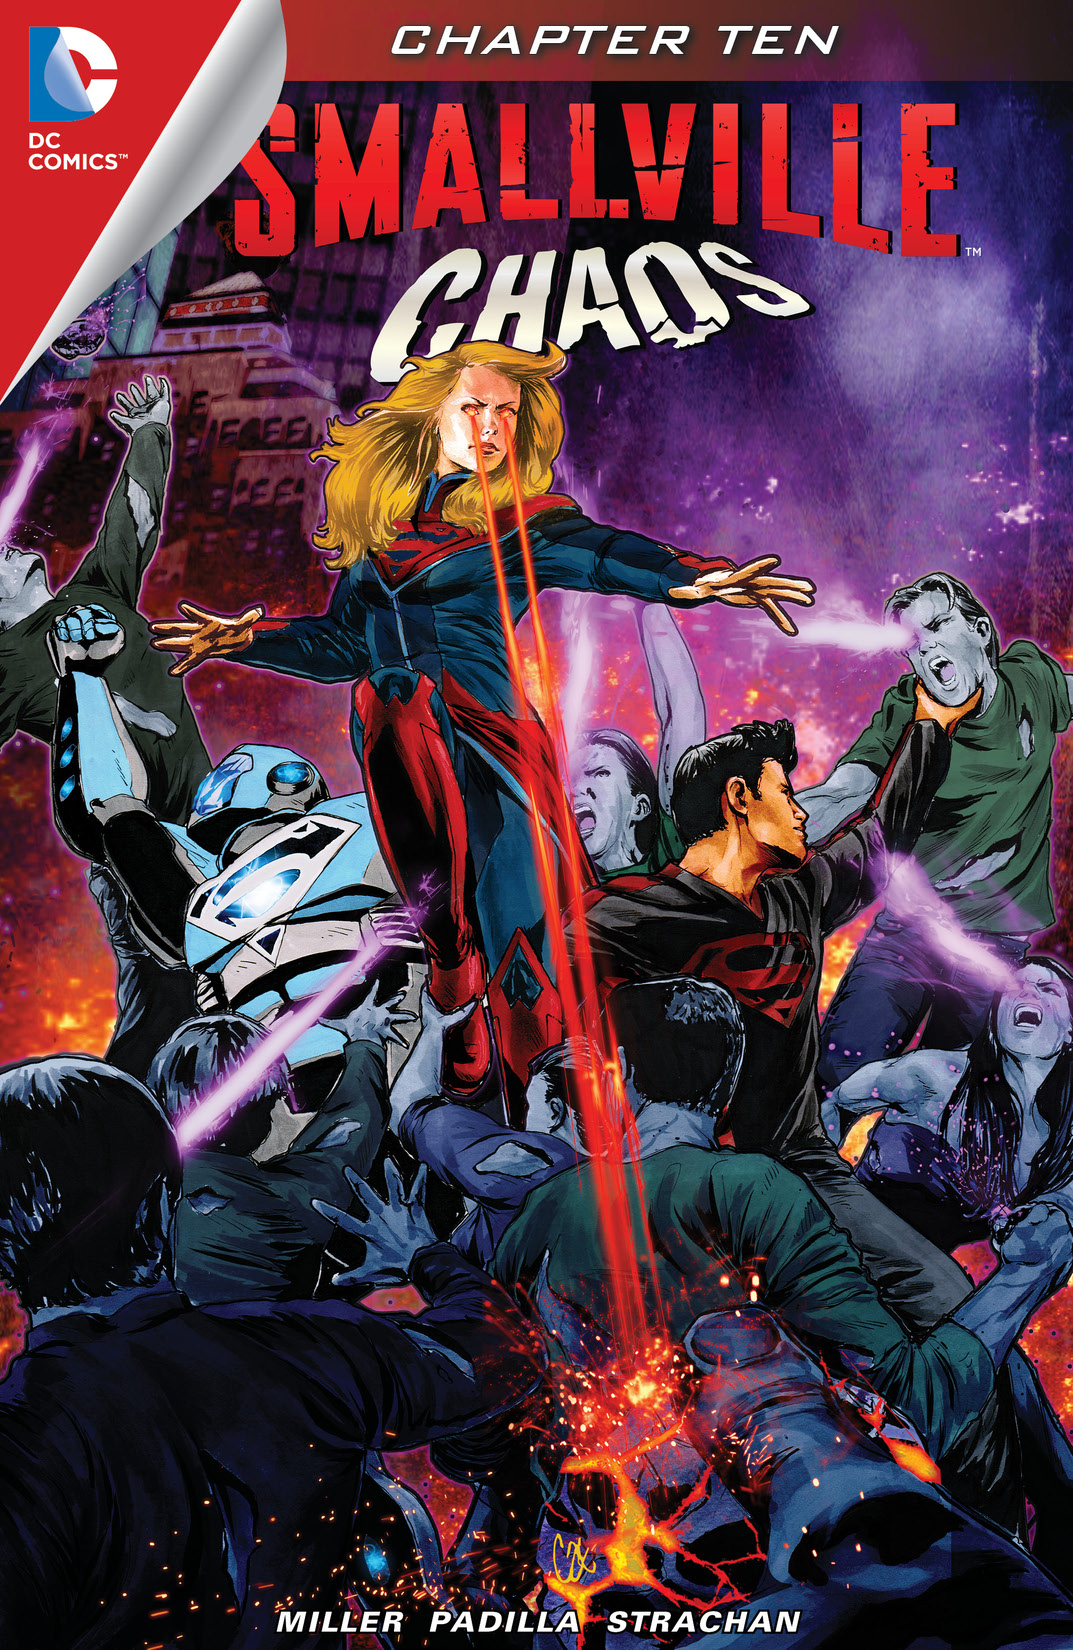 Smallville Season 11: Chaos #10 preview images